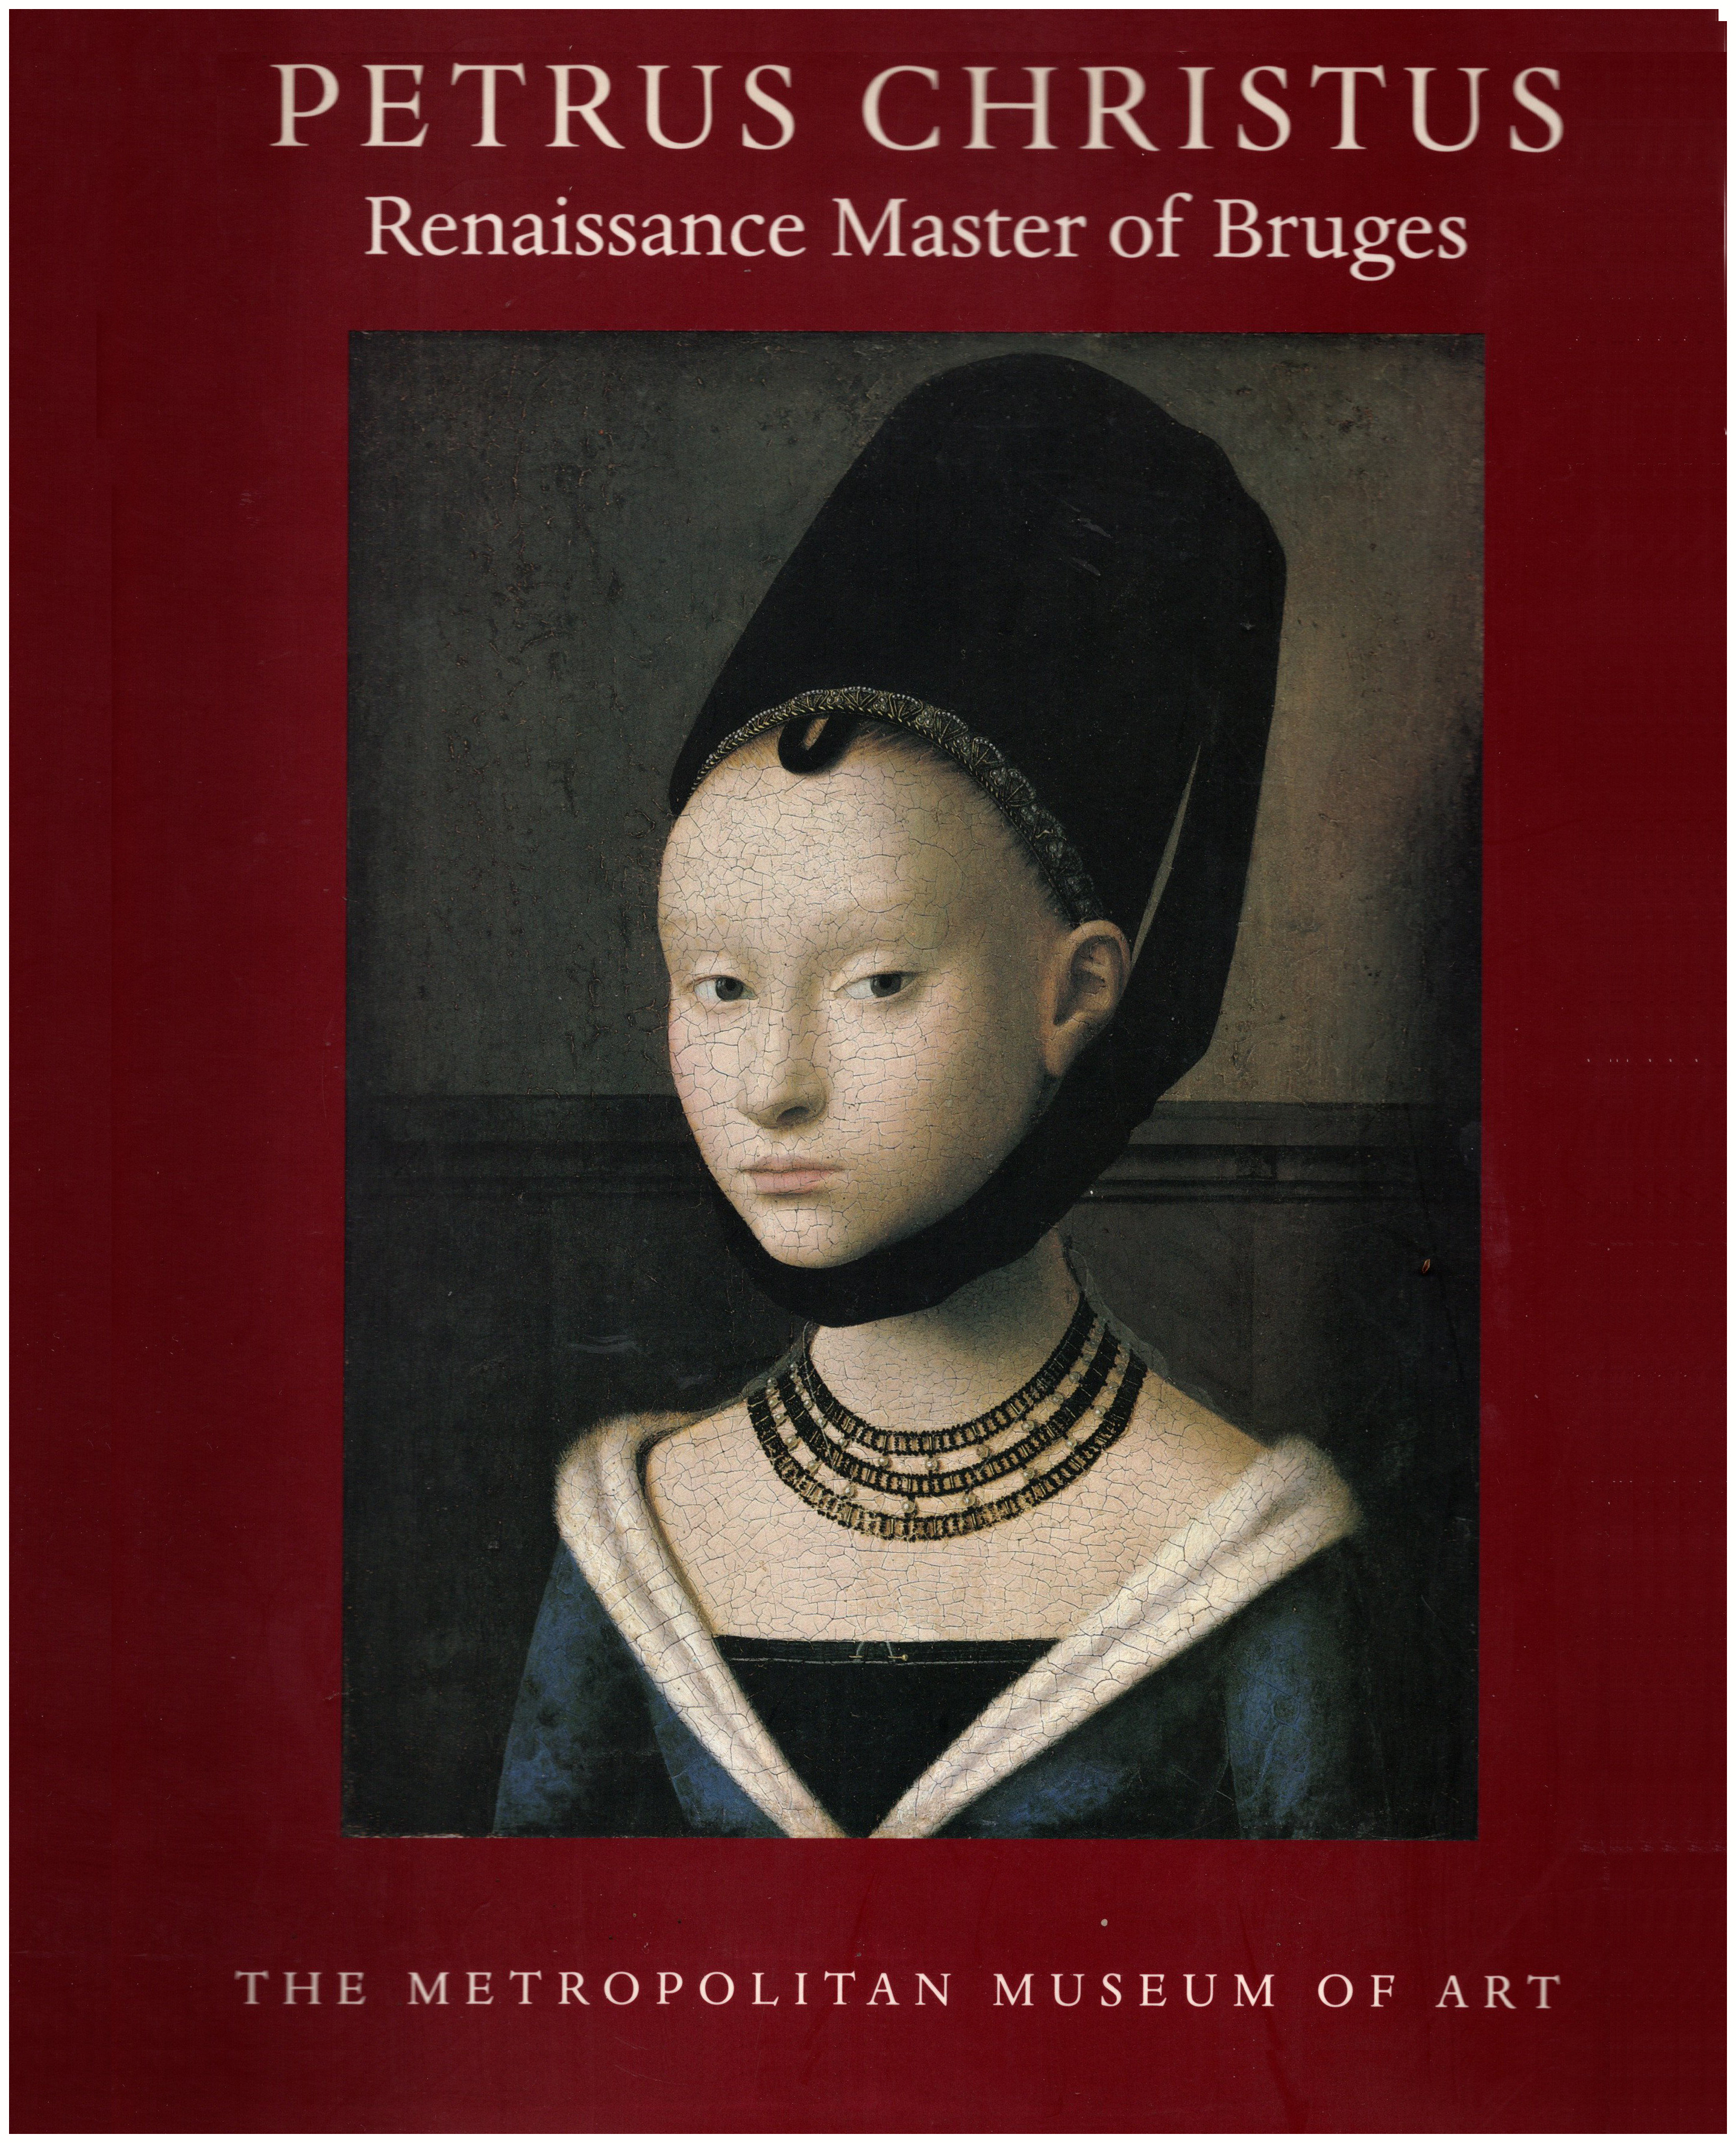 Ainsworth, Maryan W.; Martens, Maximilliaan P. J. - Petrus Christus: Renaissance Master of Bruges